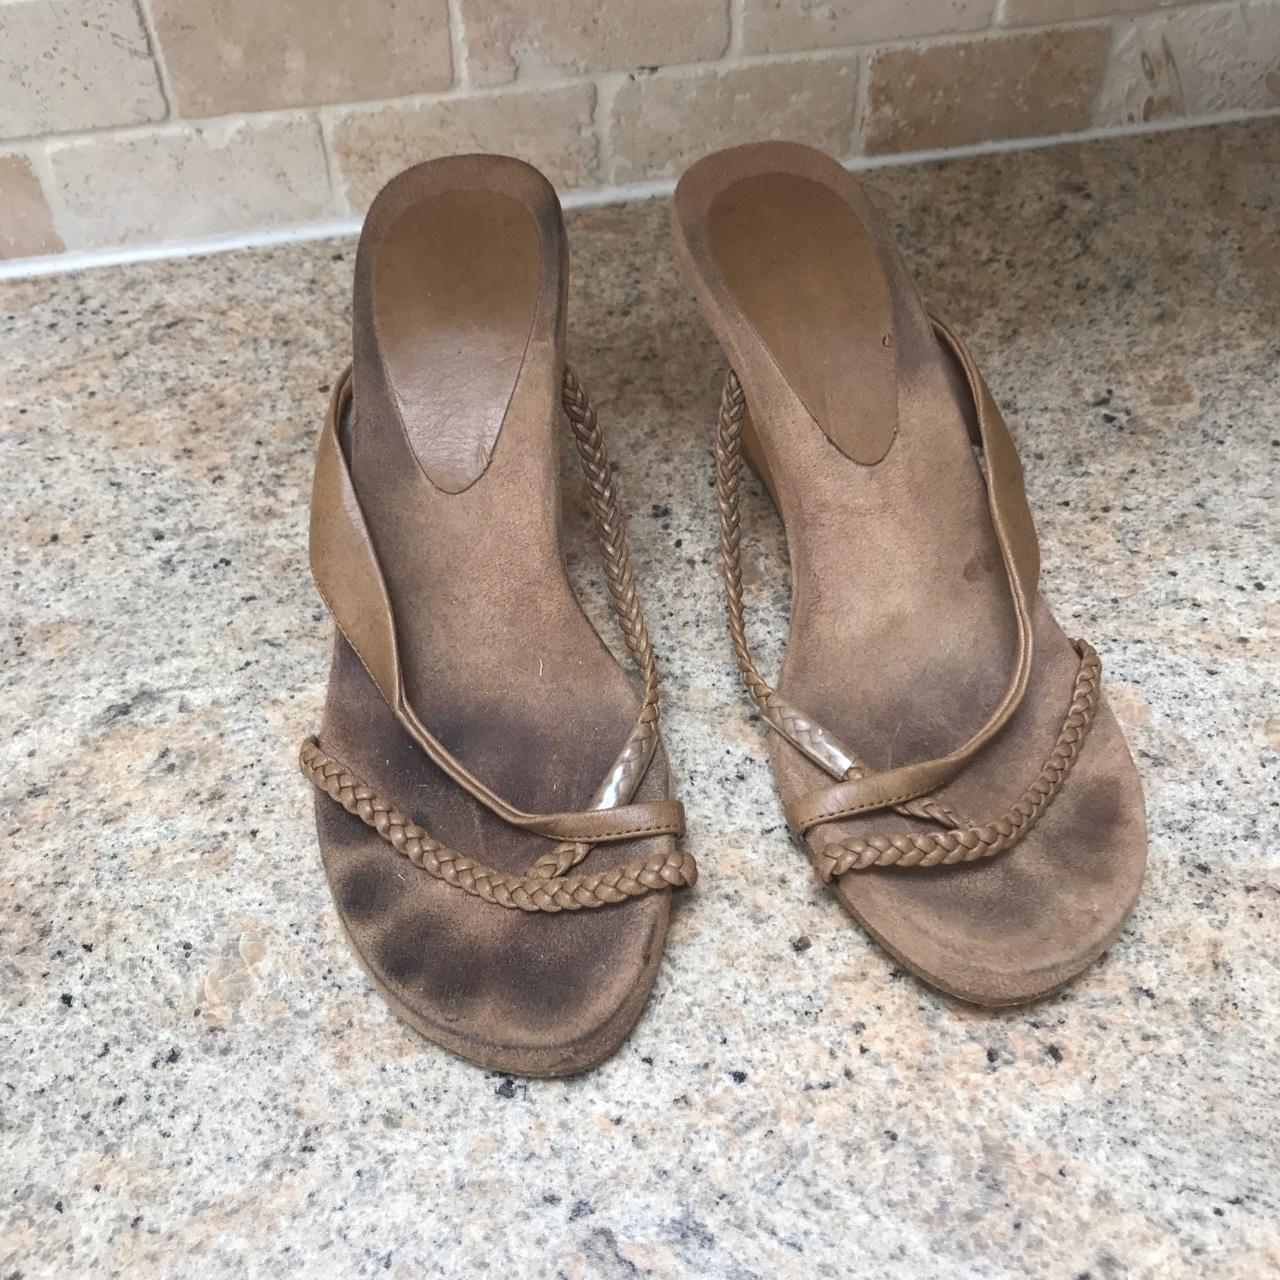 Toe sandals- 3” wedge. Size 7. Happy to do bundles - Depop